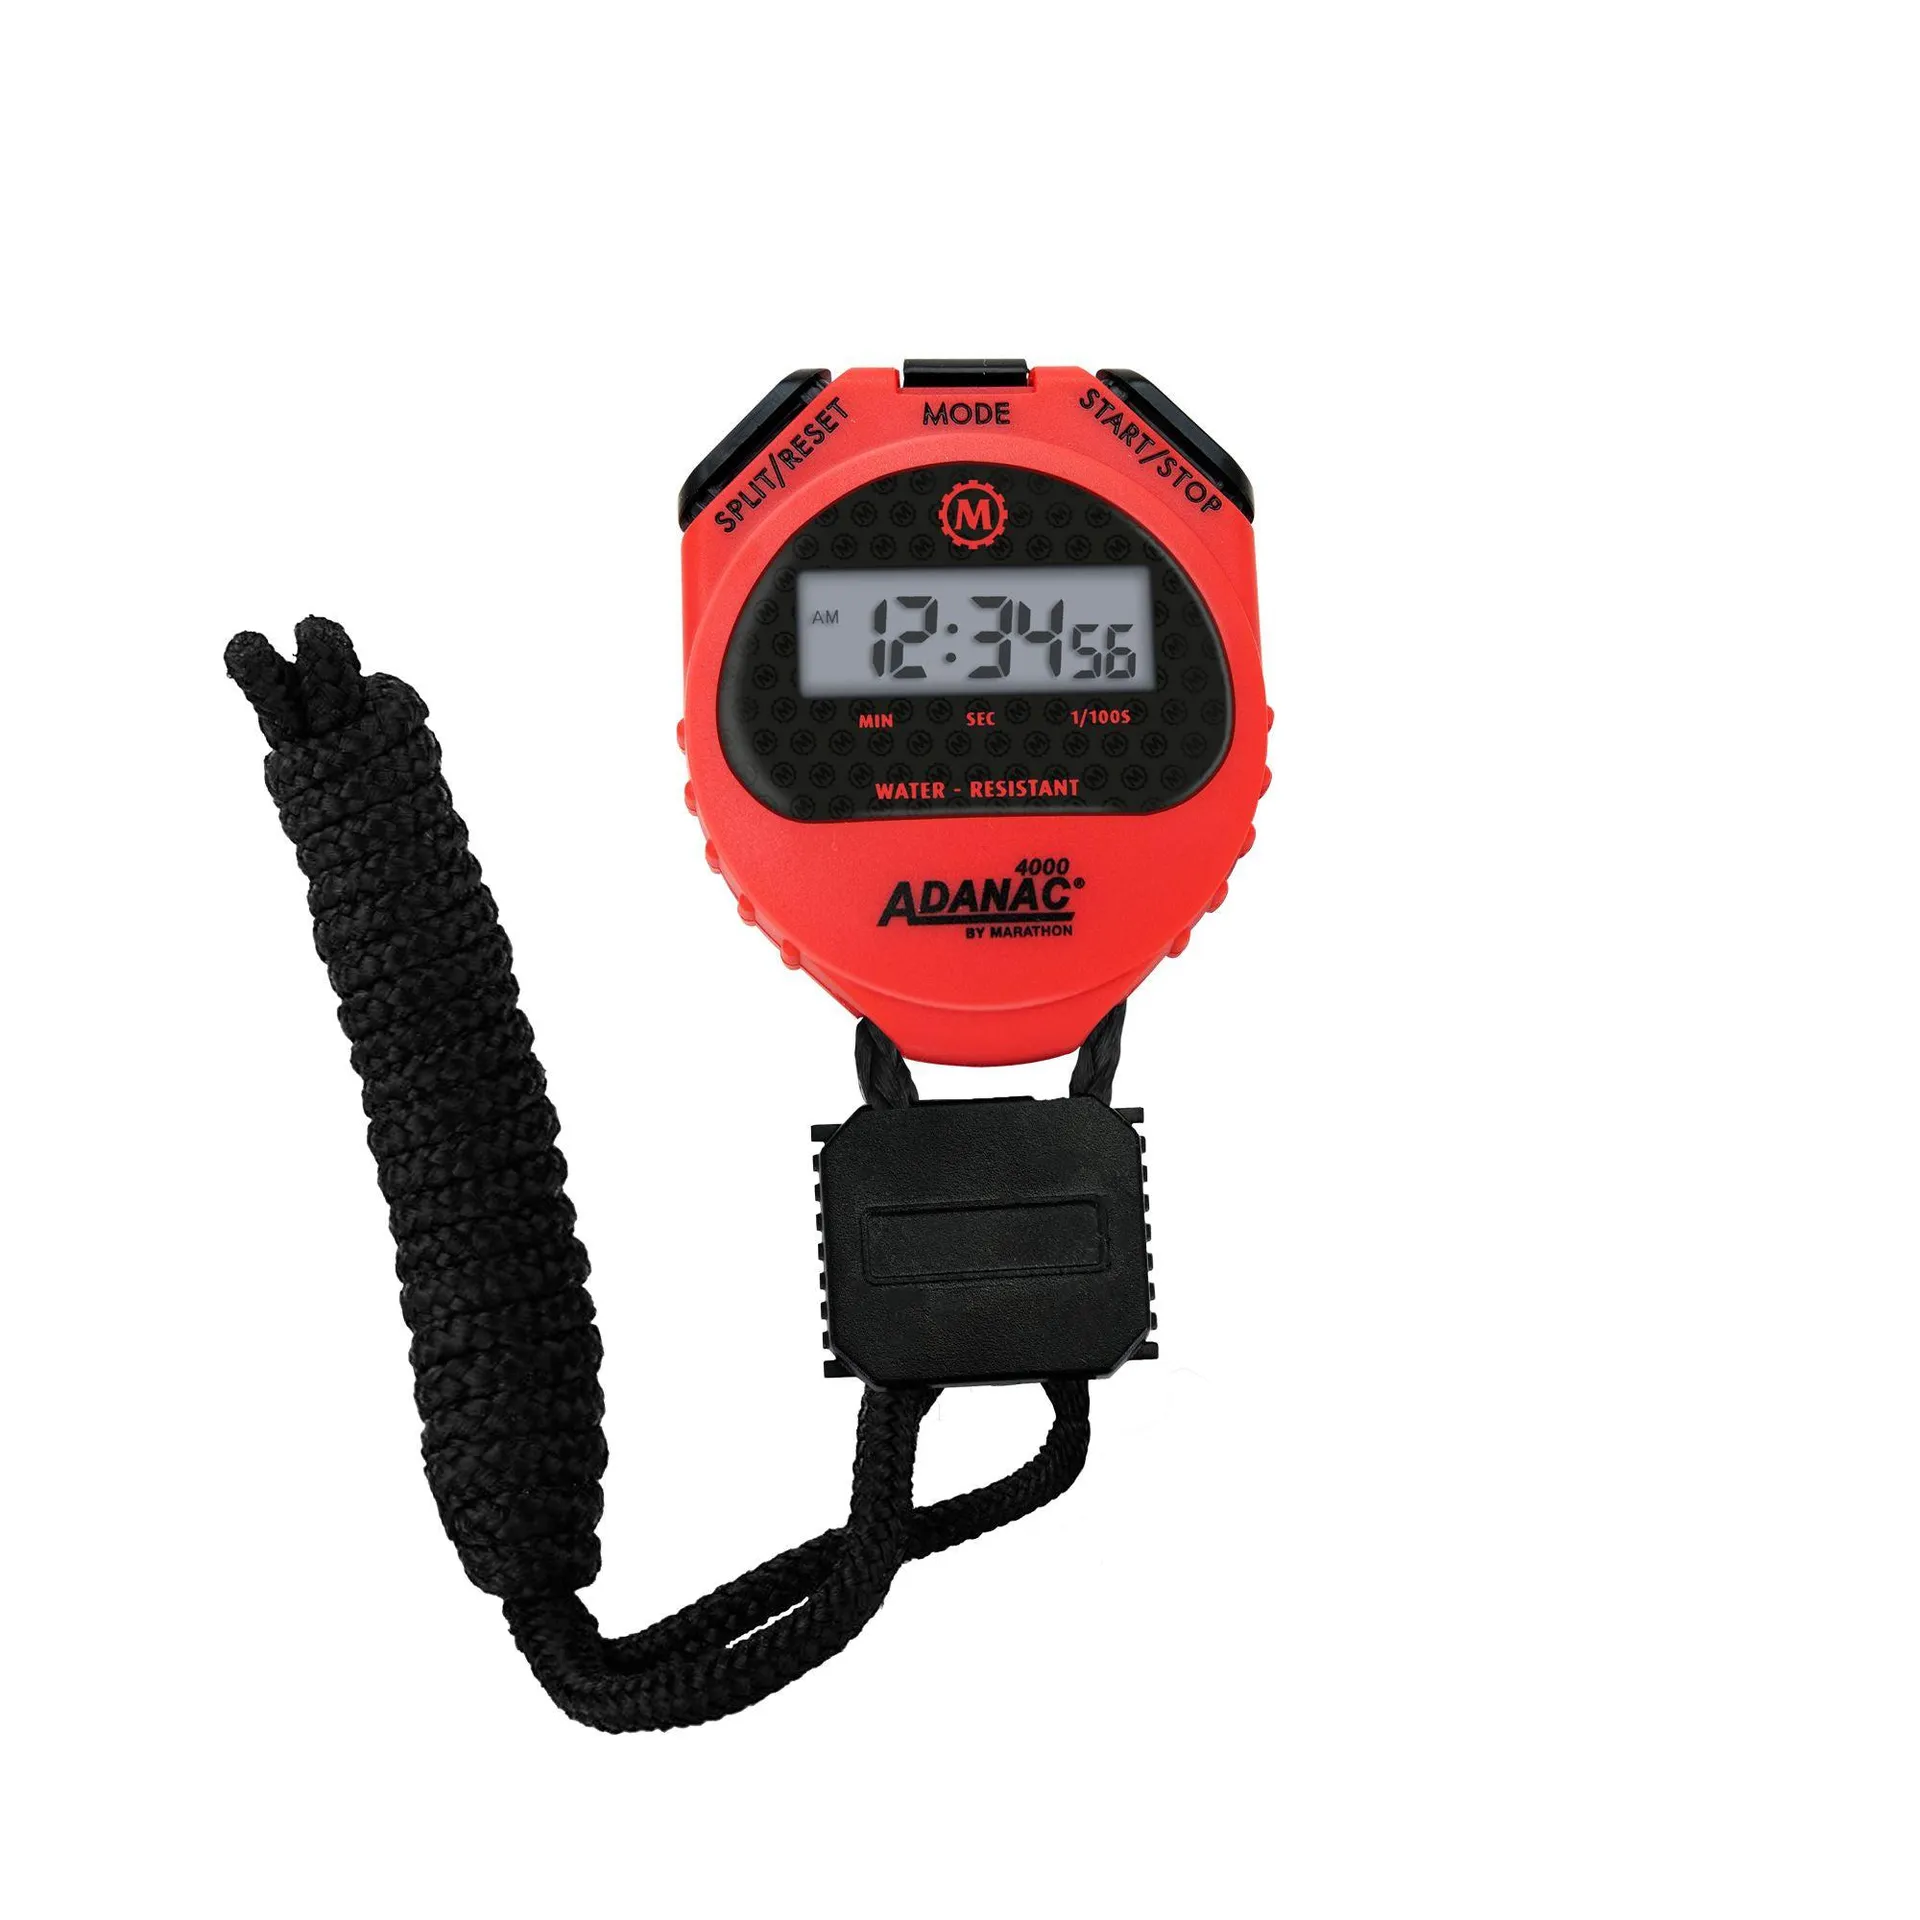 Marathon ADANAC 4000 Water-Resistant Digital Stopwatch with Jumbo Display